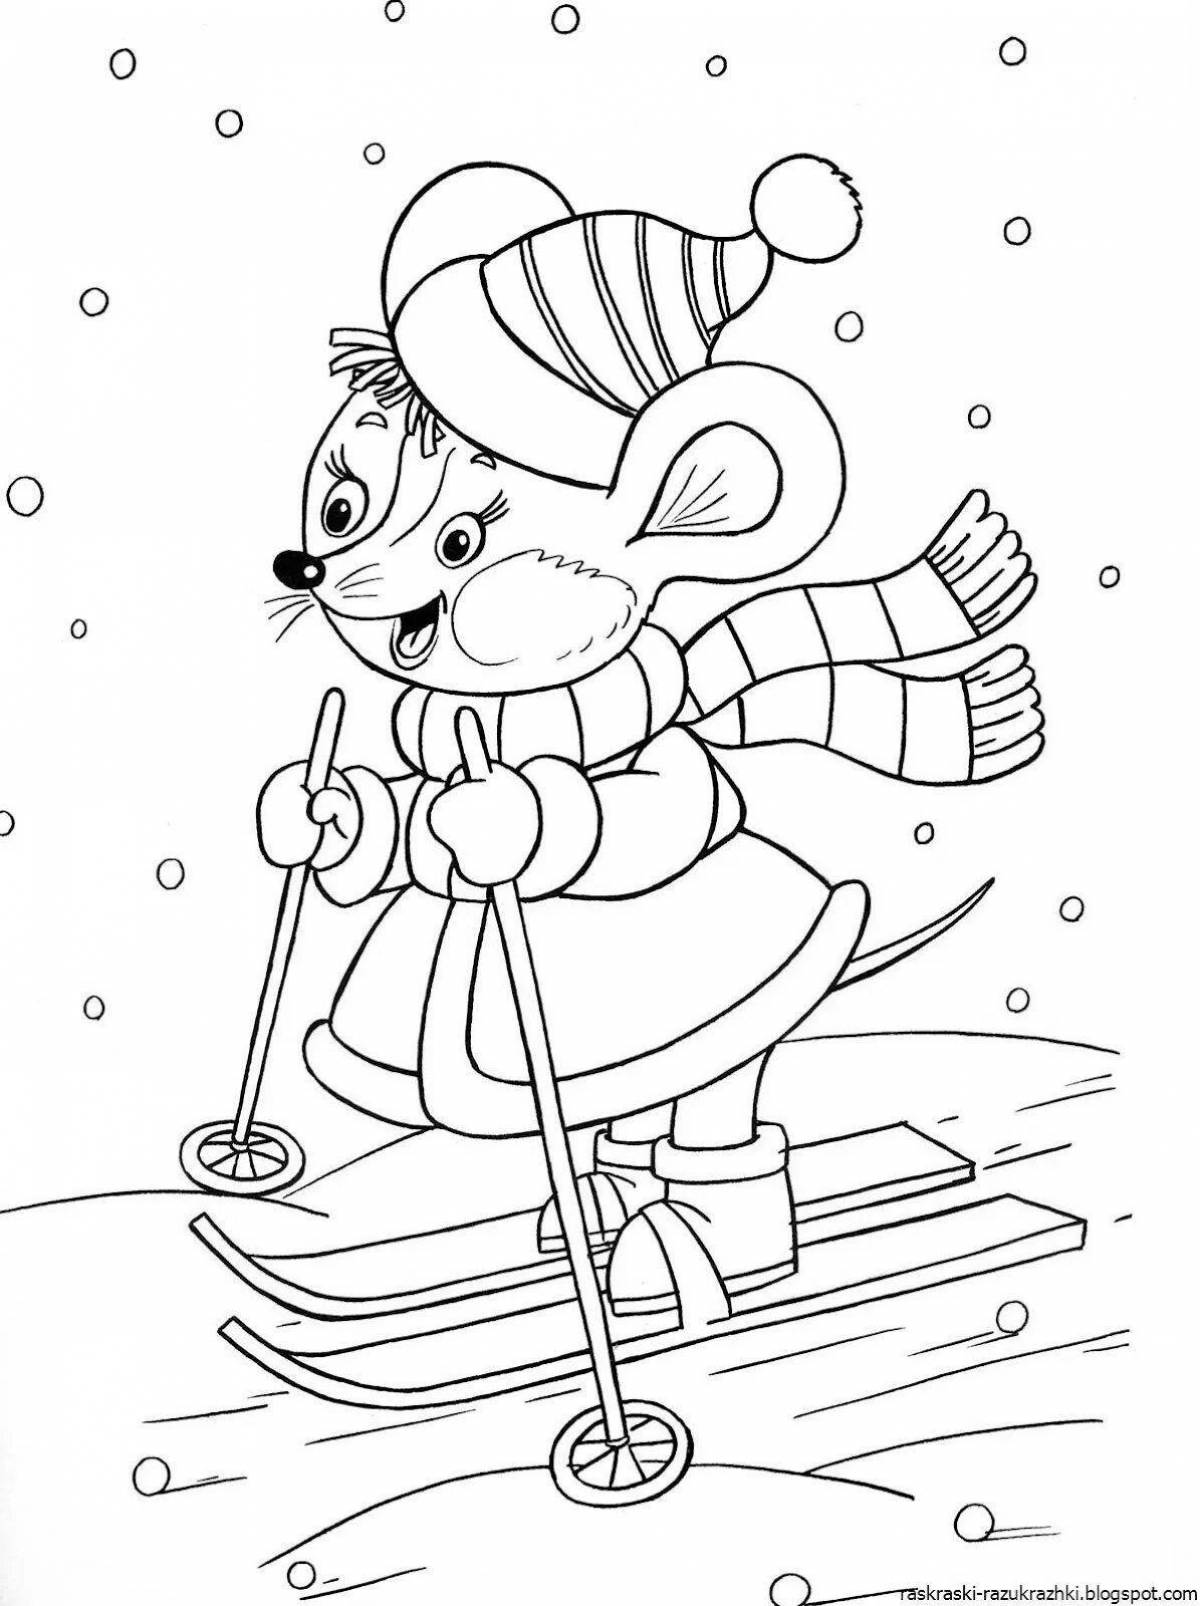 Adorable children's winter coloring book